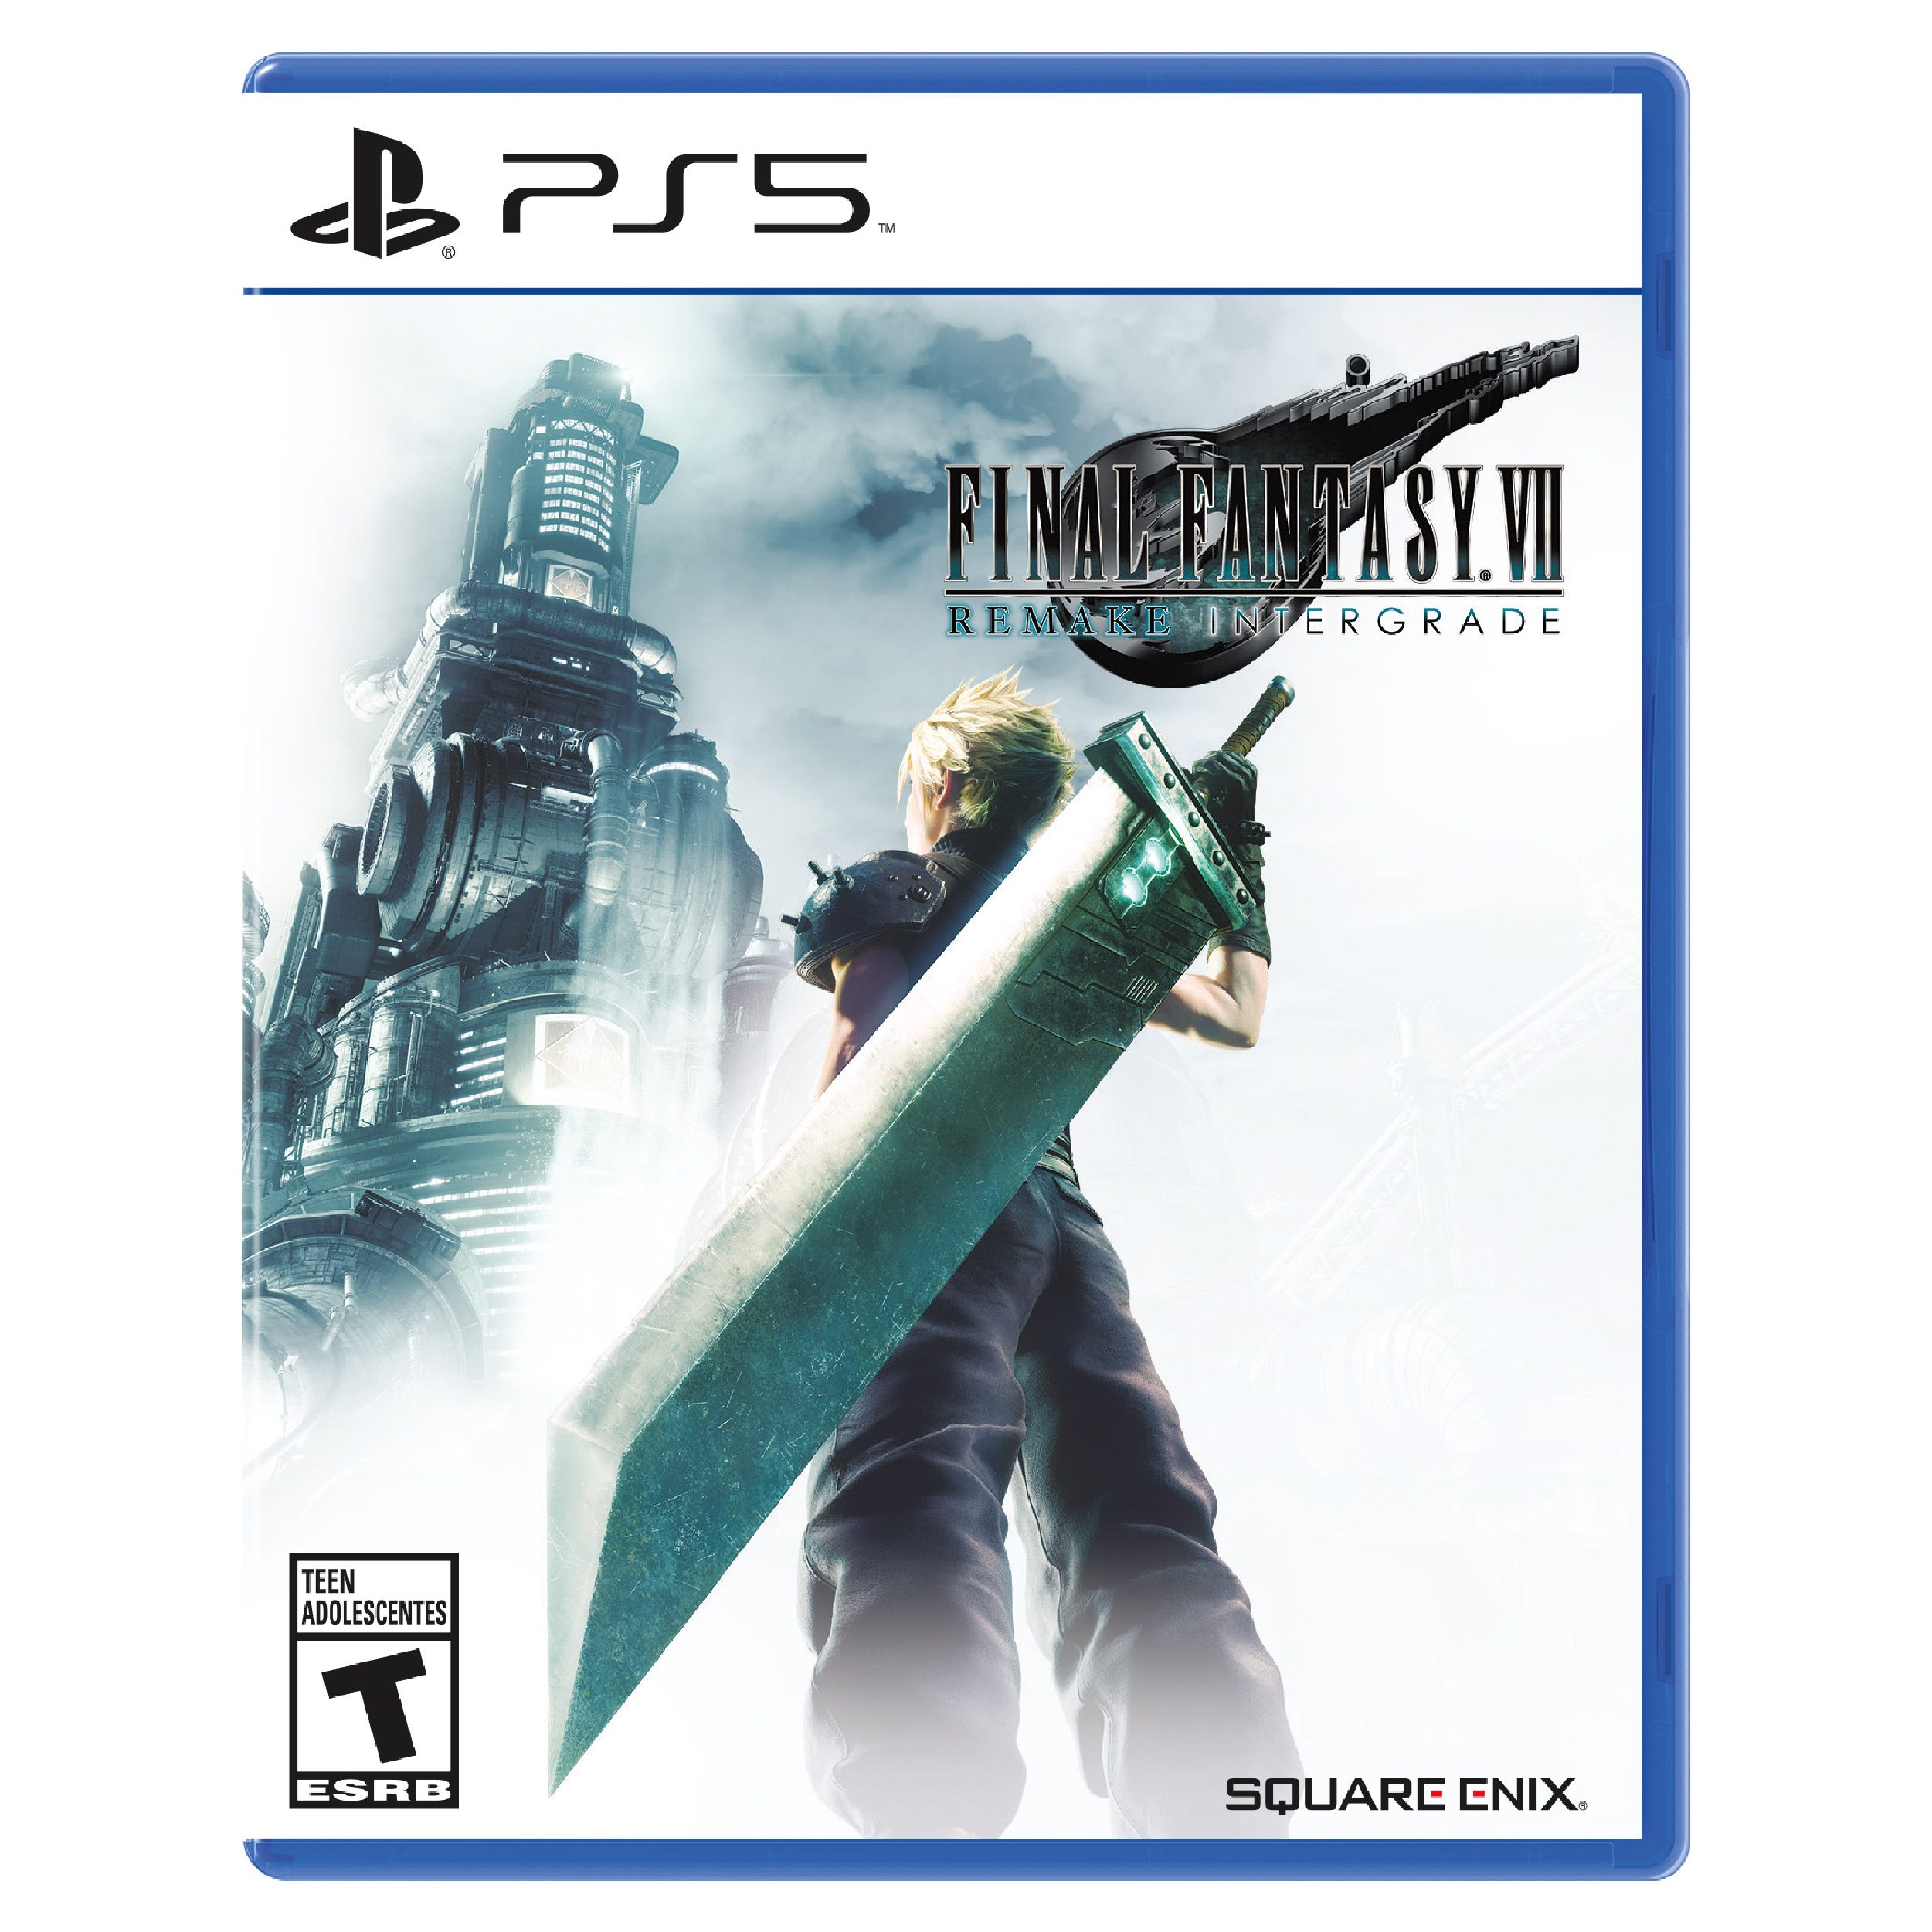 Final Fantasy VII Remake Intergrade PS5 (New)